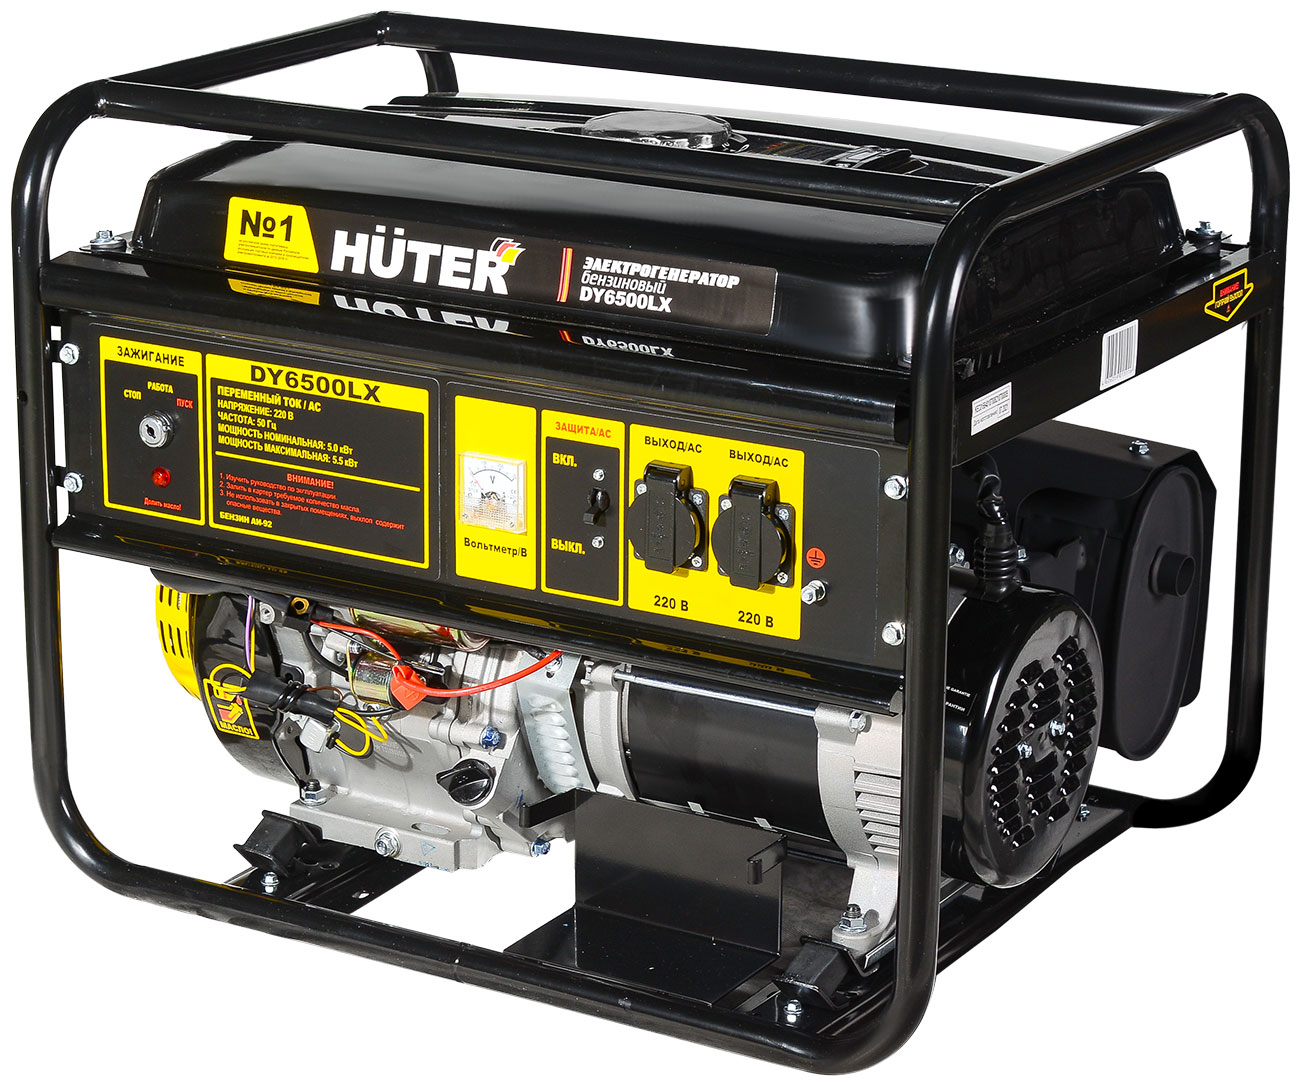 Электрический генератор и электростанция Huter DY6500LX- электростартер электрический генератор и электростанция huter dy6500l